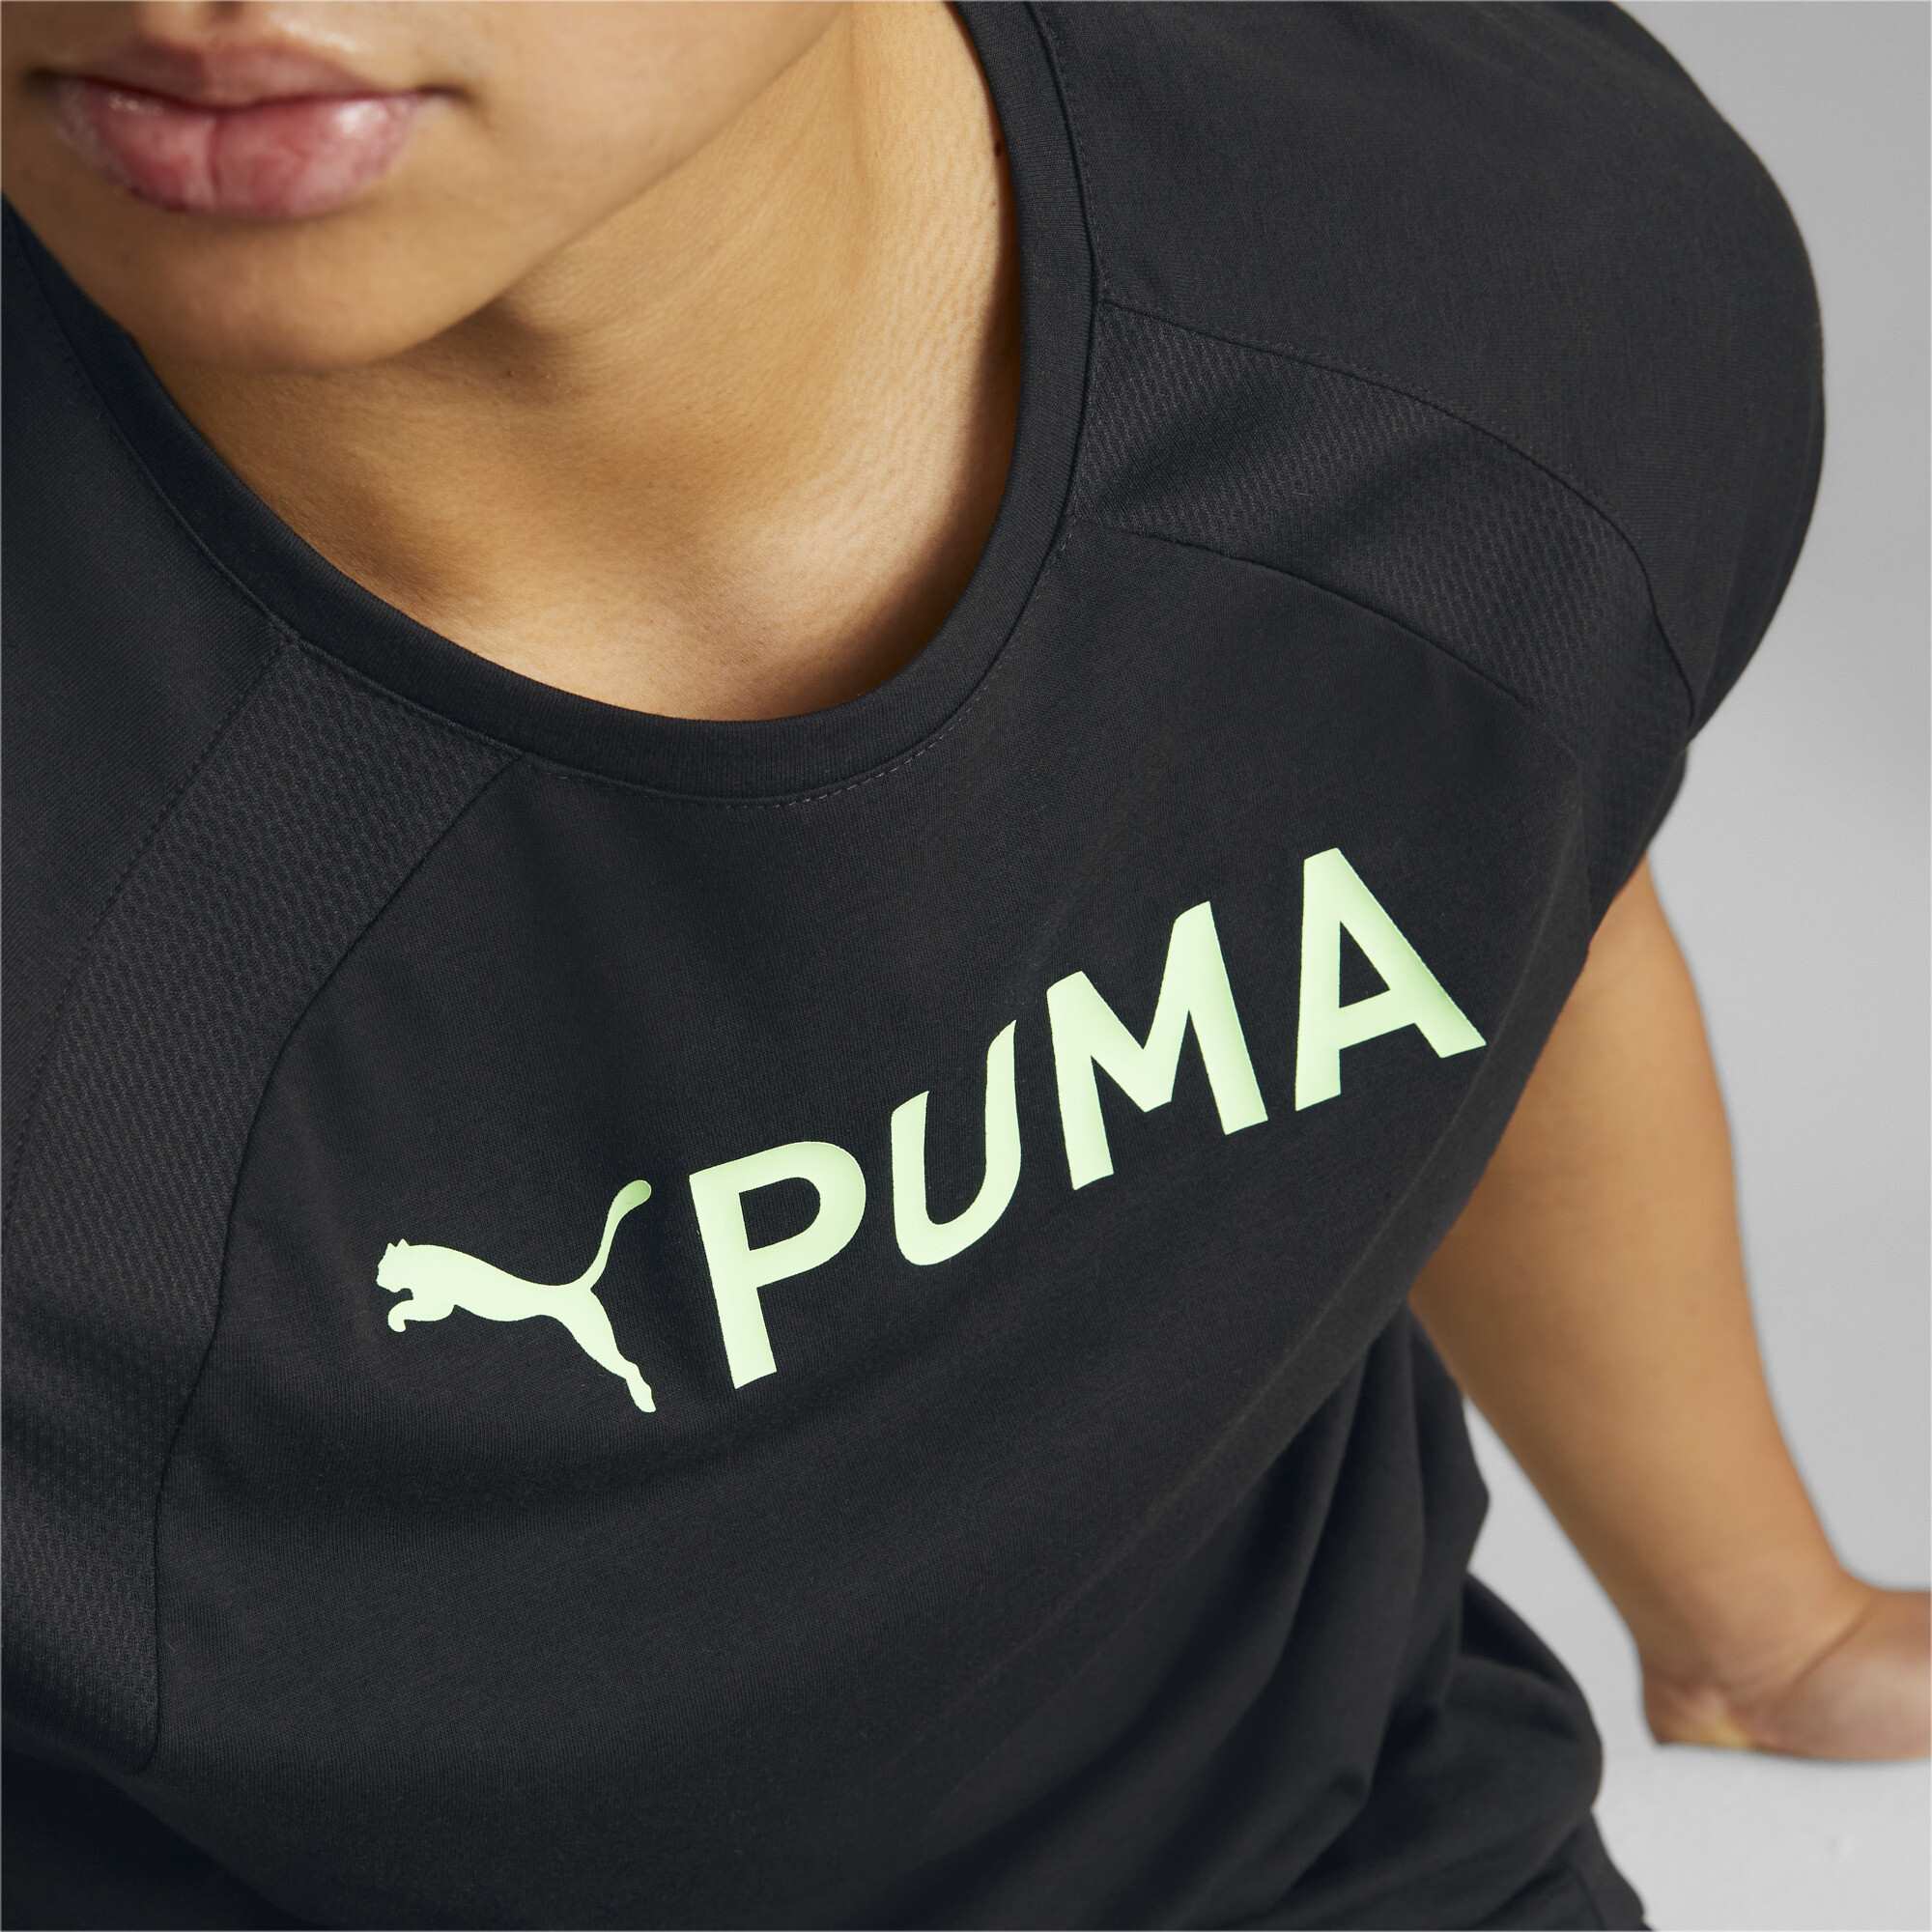 Men's PUMA Fit Ultrabreathe Triblend Training T-Shirt Men In Black, Size Large